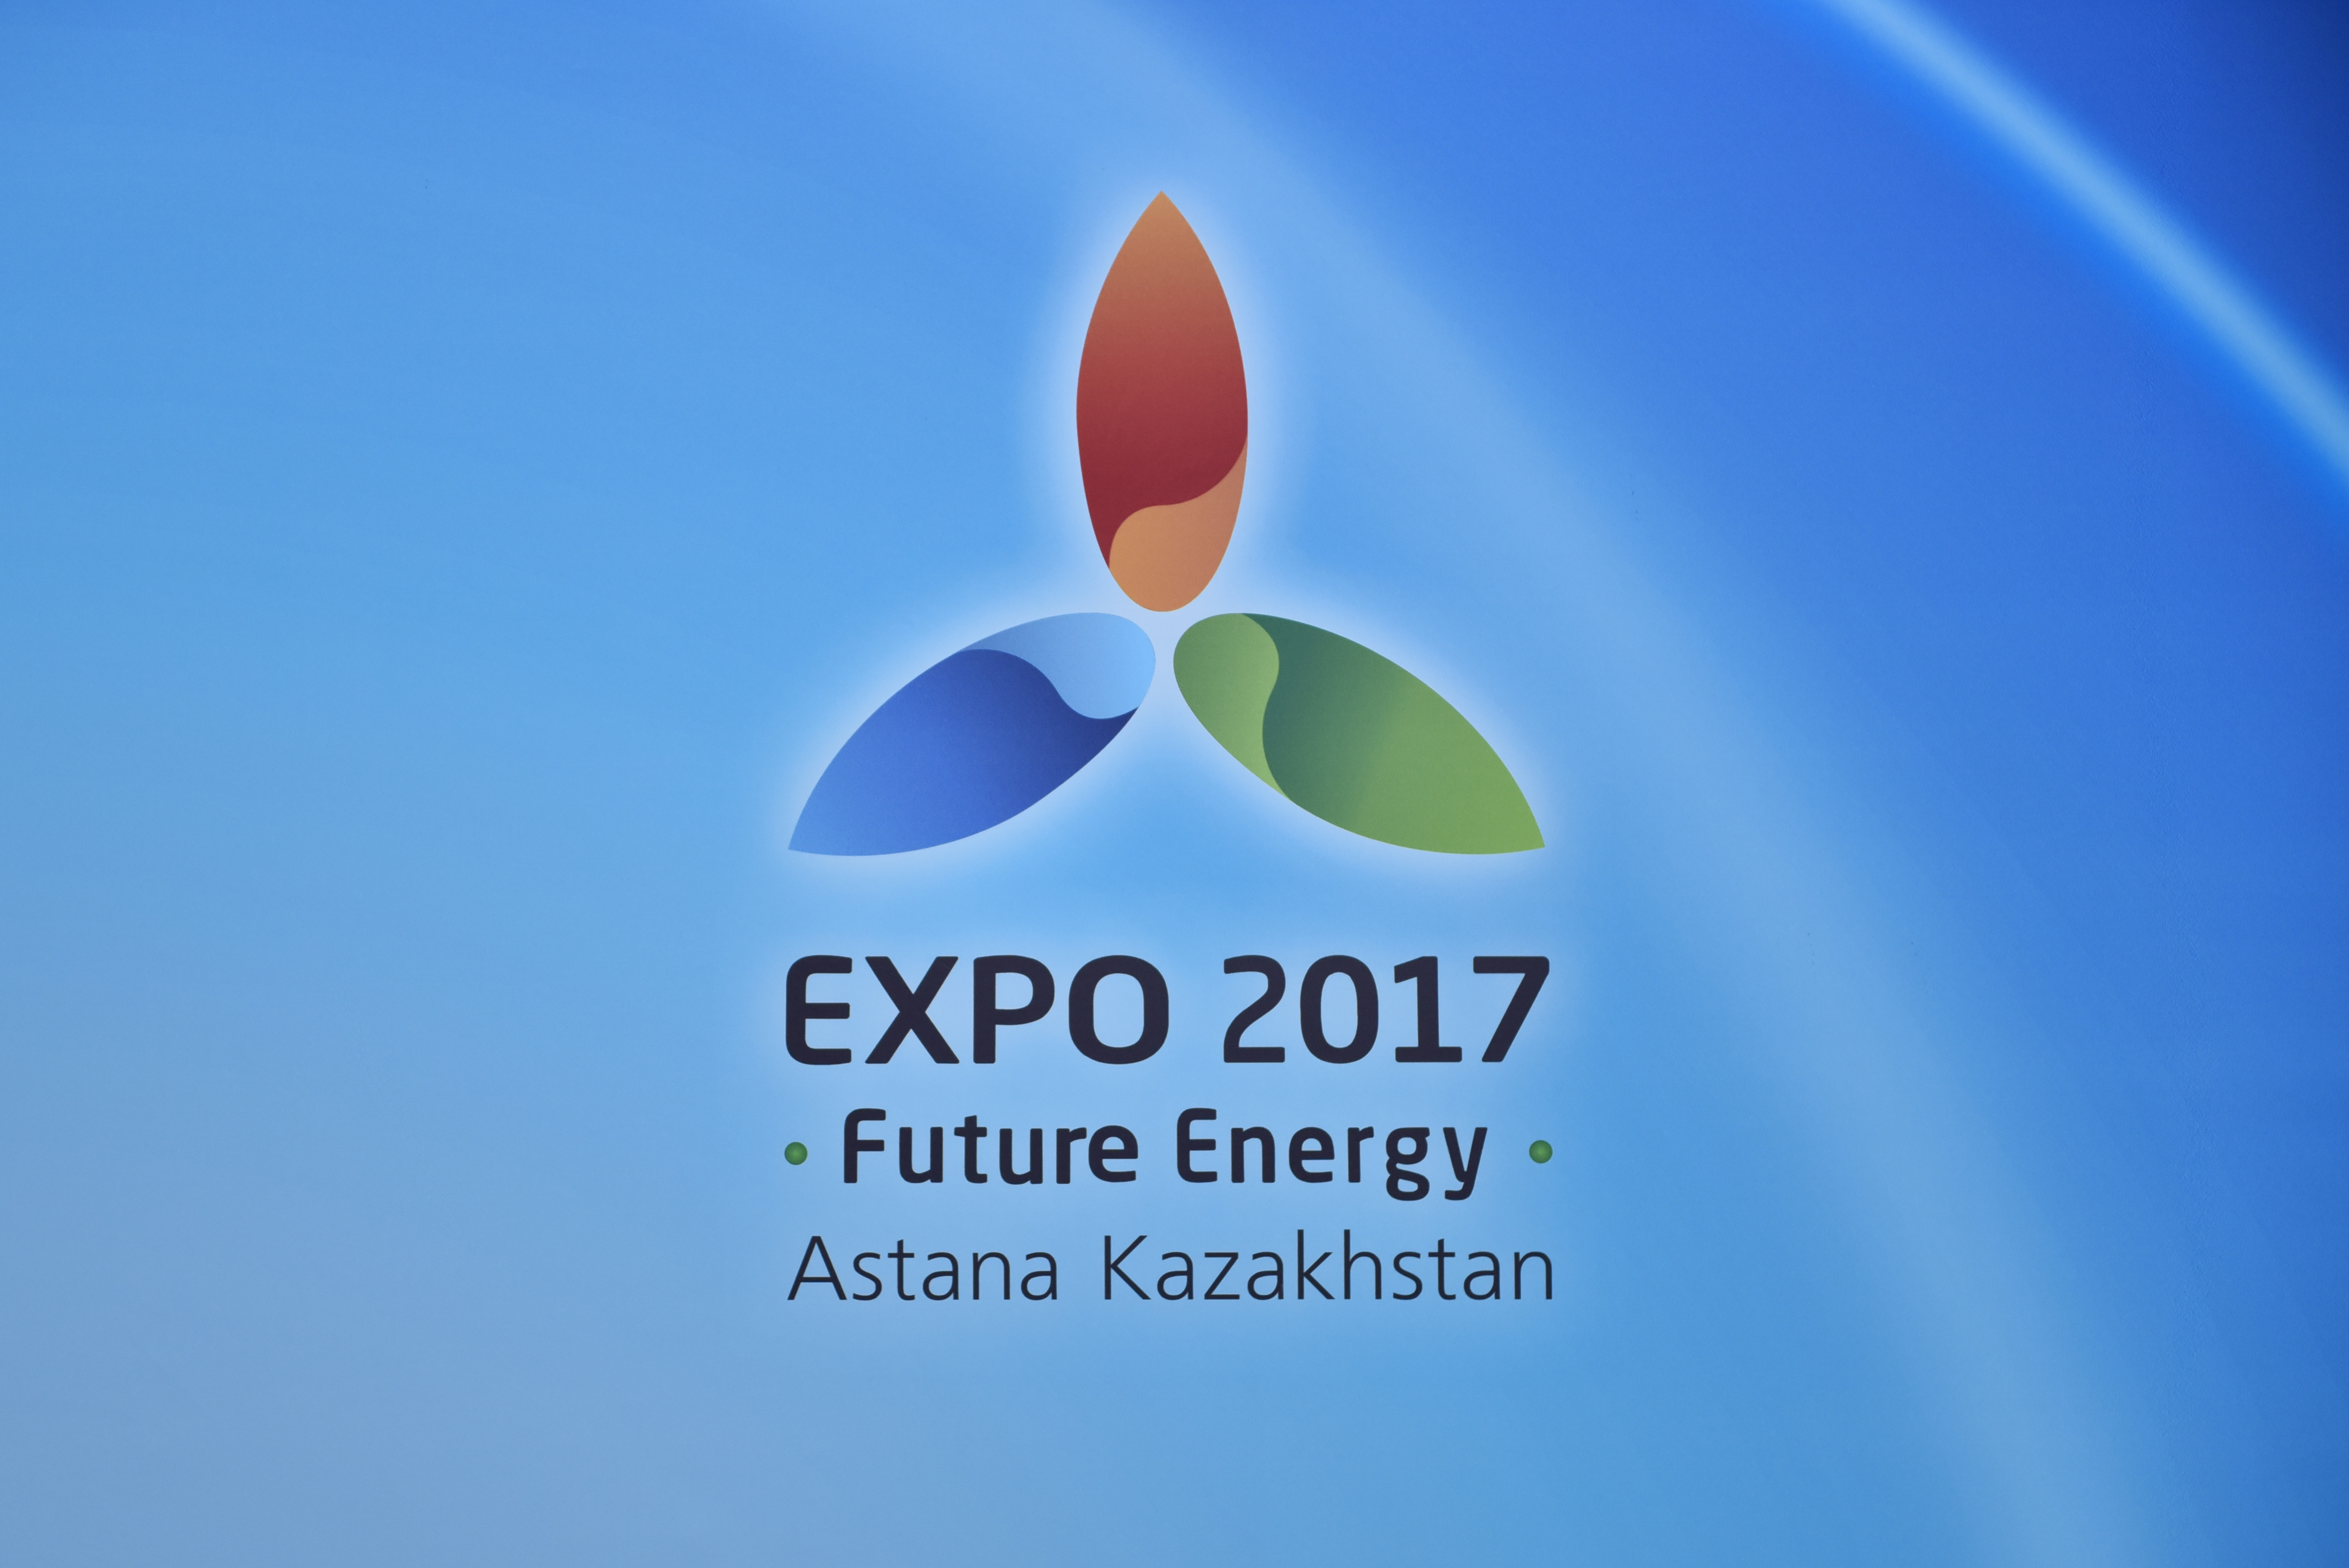 Экспо 2017 туралы. Expo 2017 логотип. Экспо 2017 Казахстан эмблема. Казахстан Экспо 2017 Астана. Экспо 2017 энергия будущего.